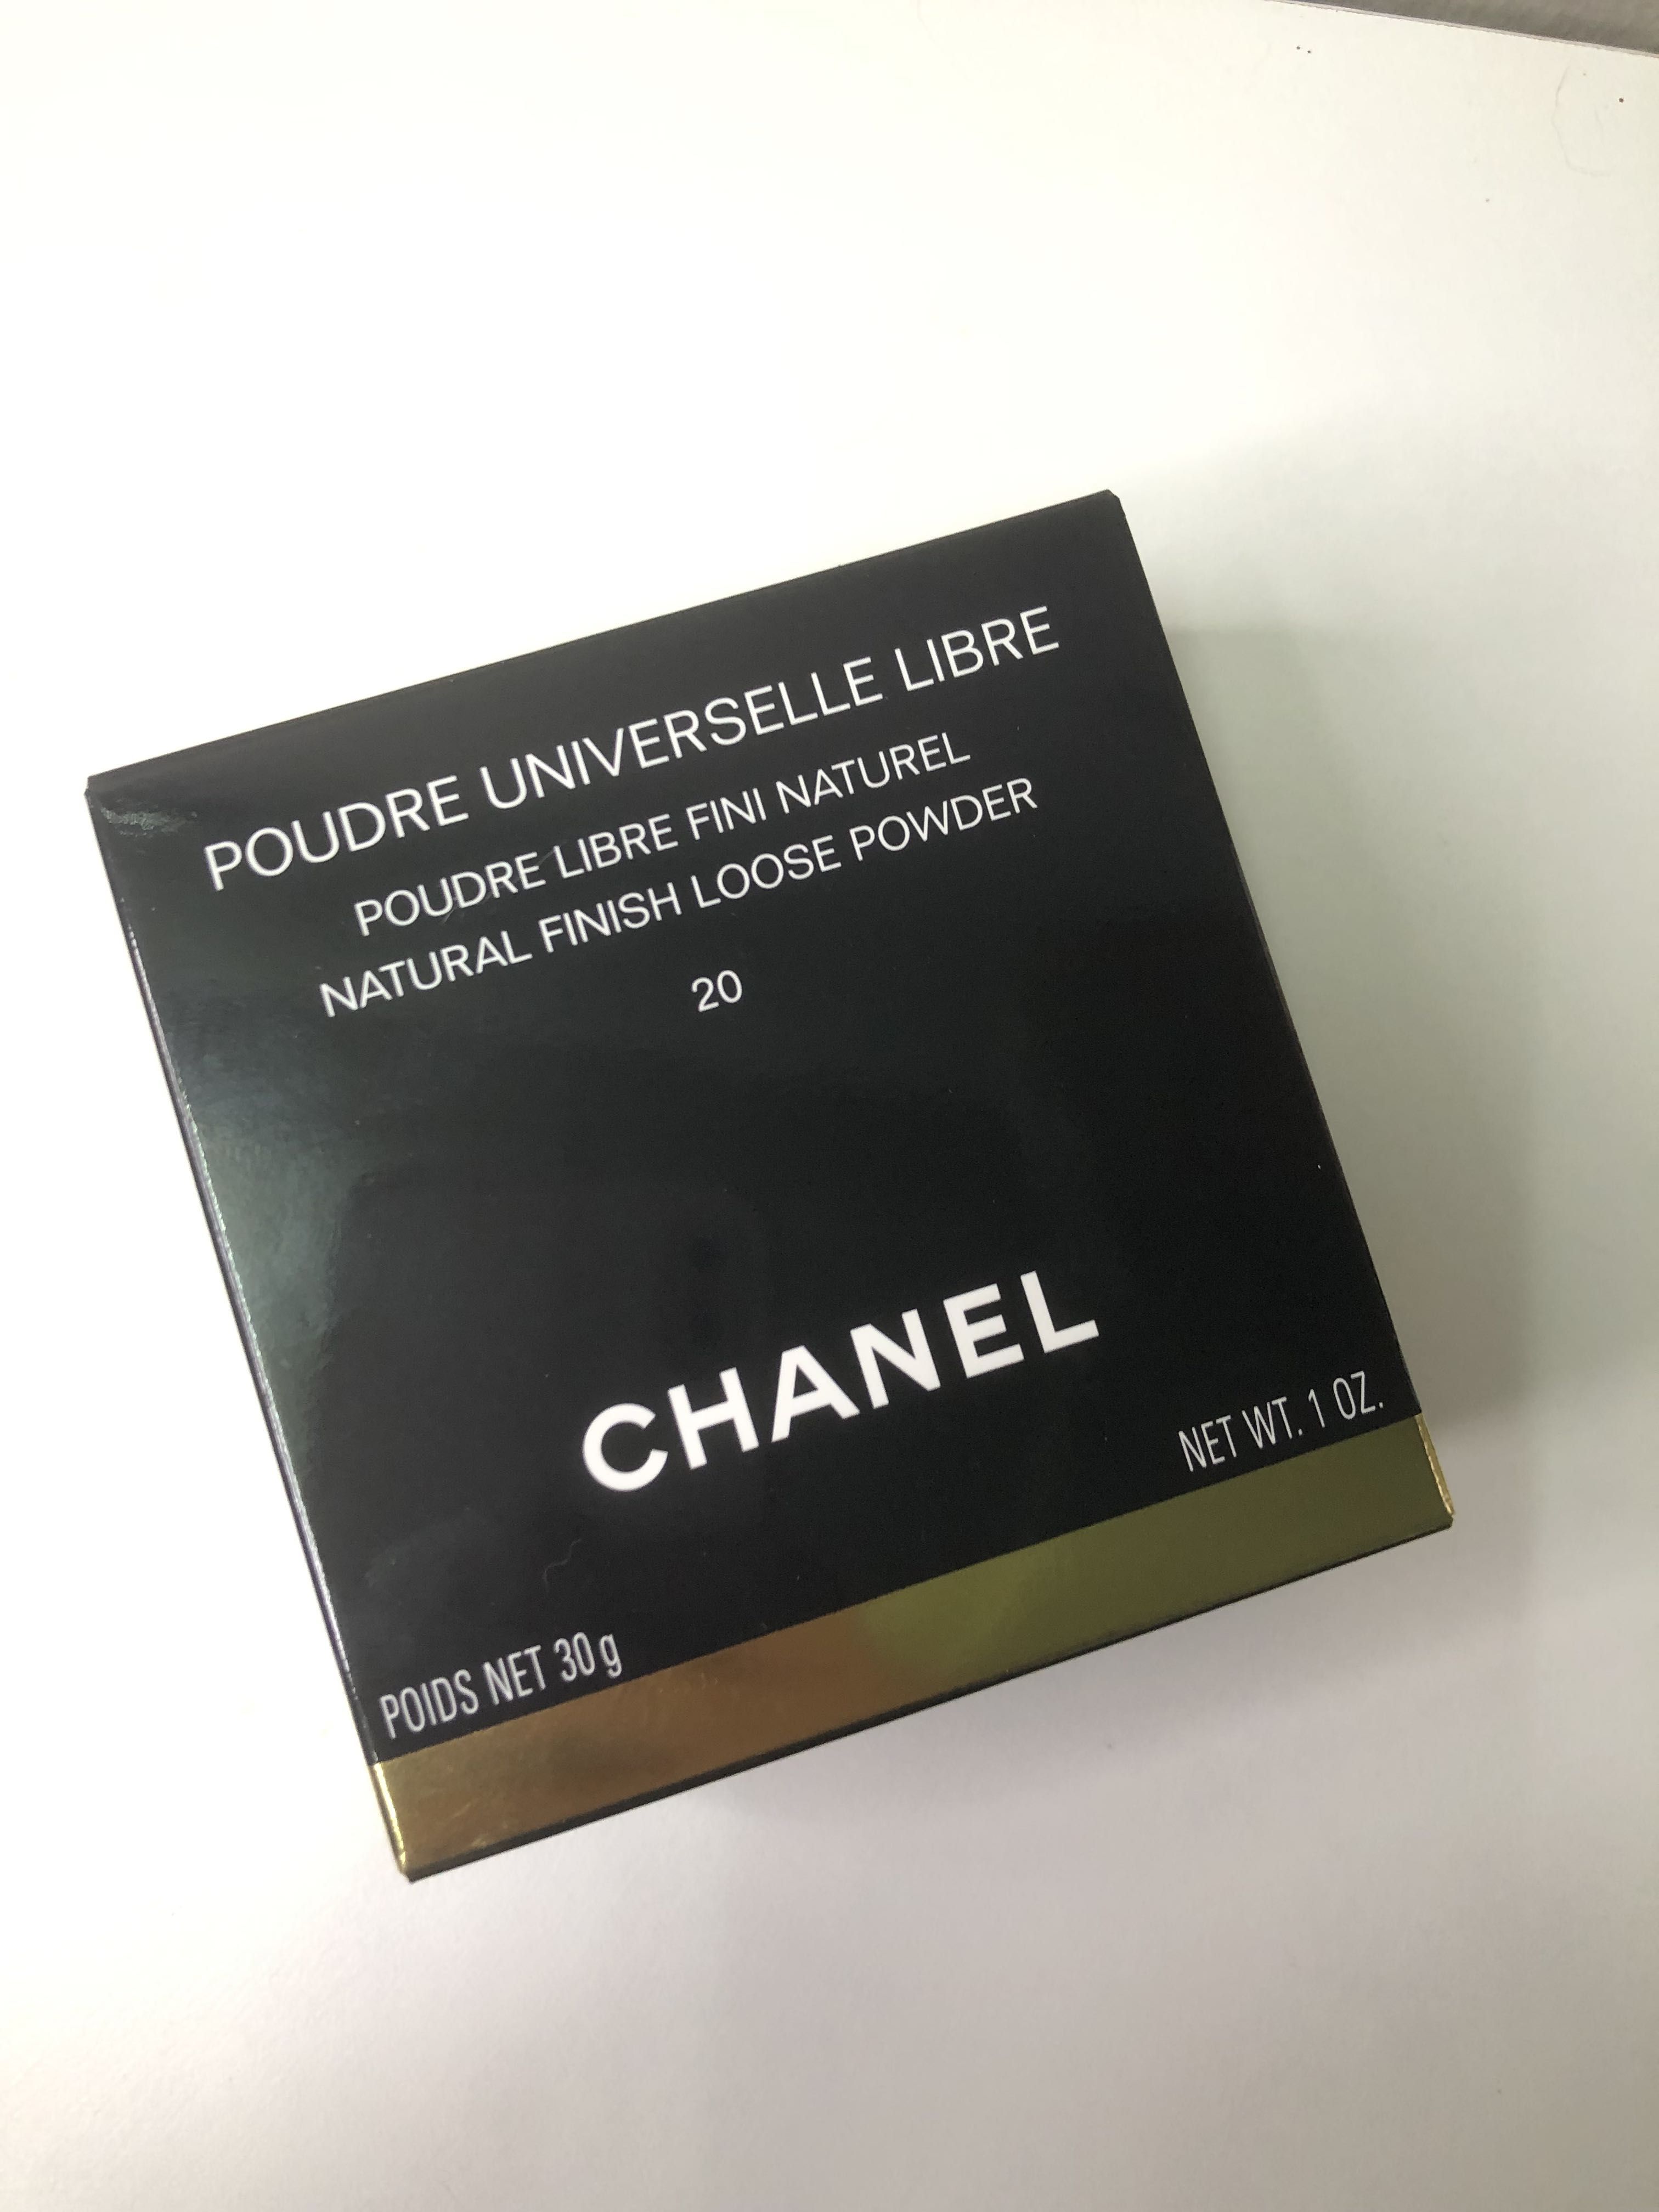 Chanel Natural Finish Loose Powder 30g (Assorted Shades)